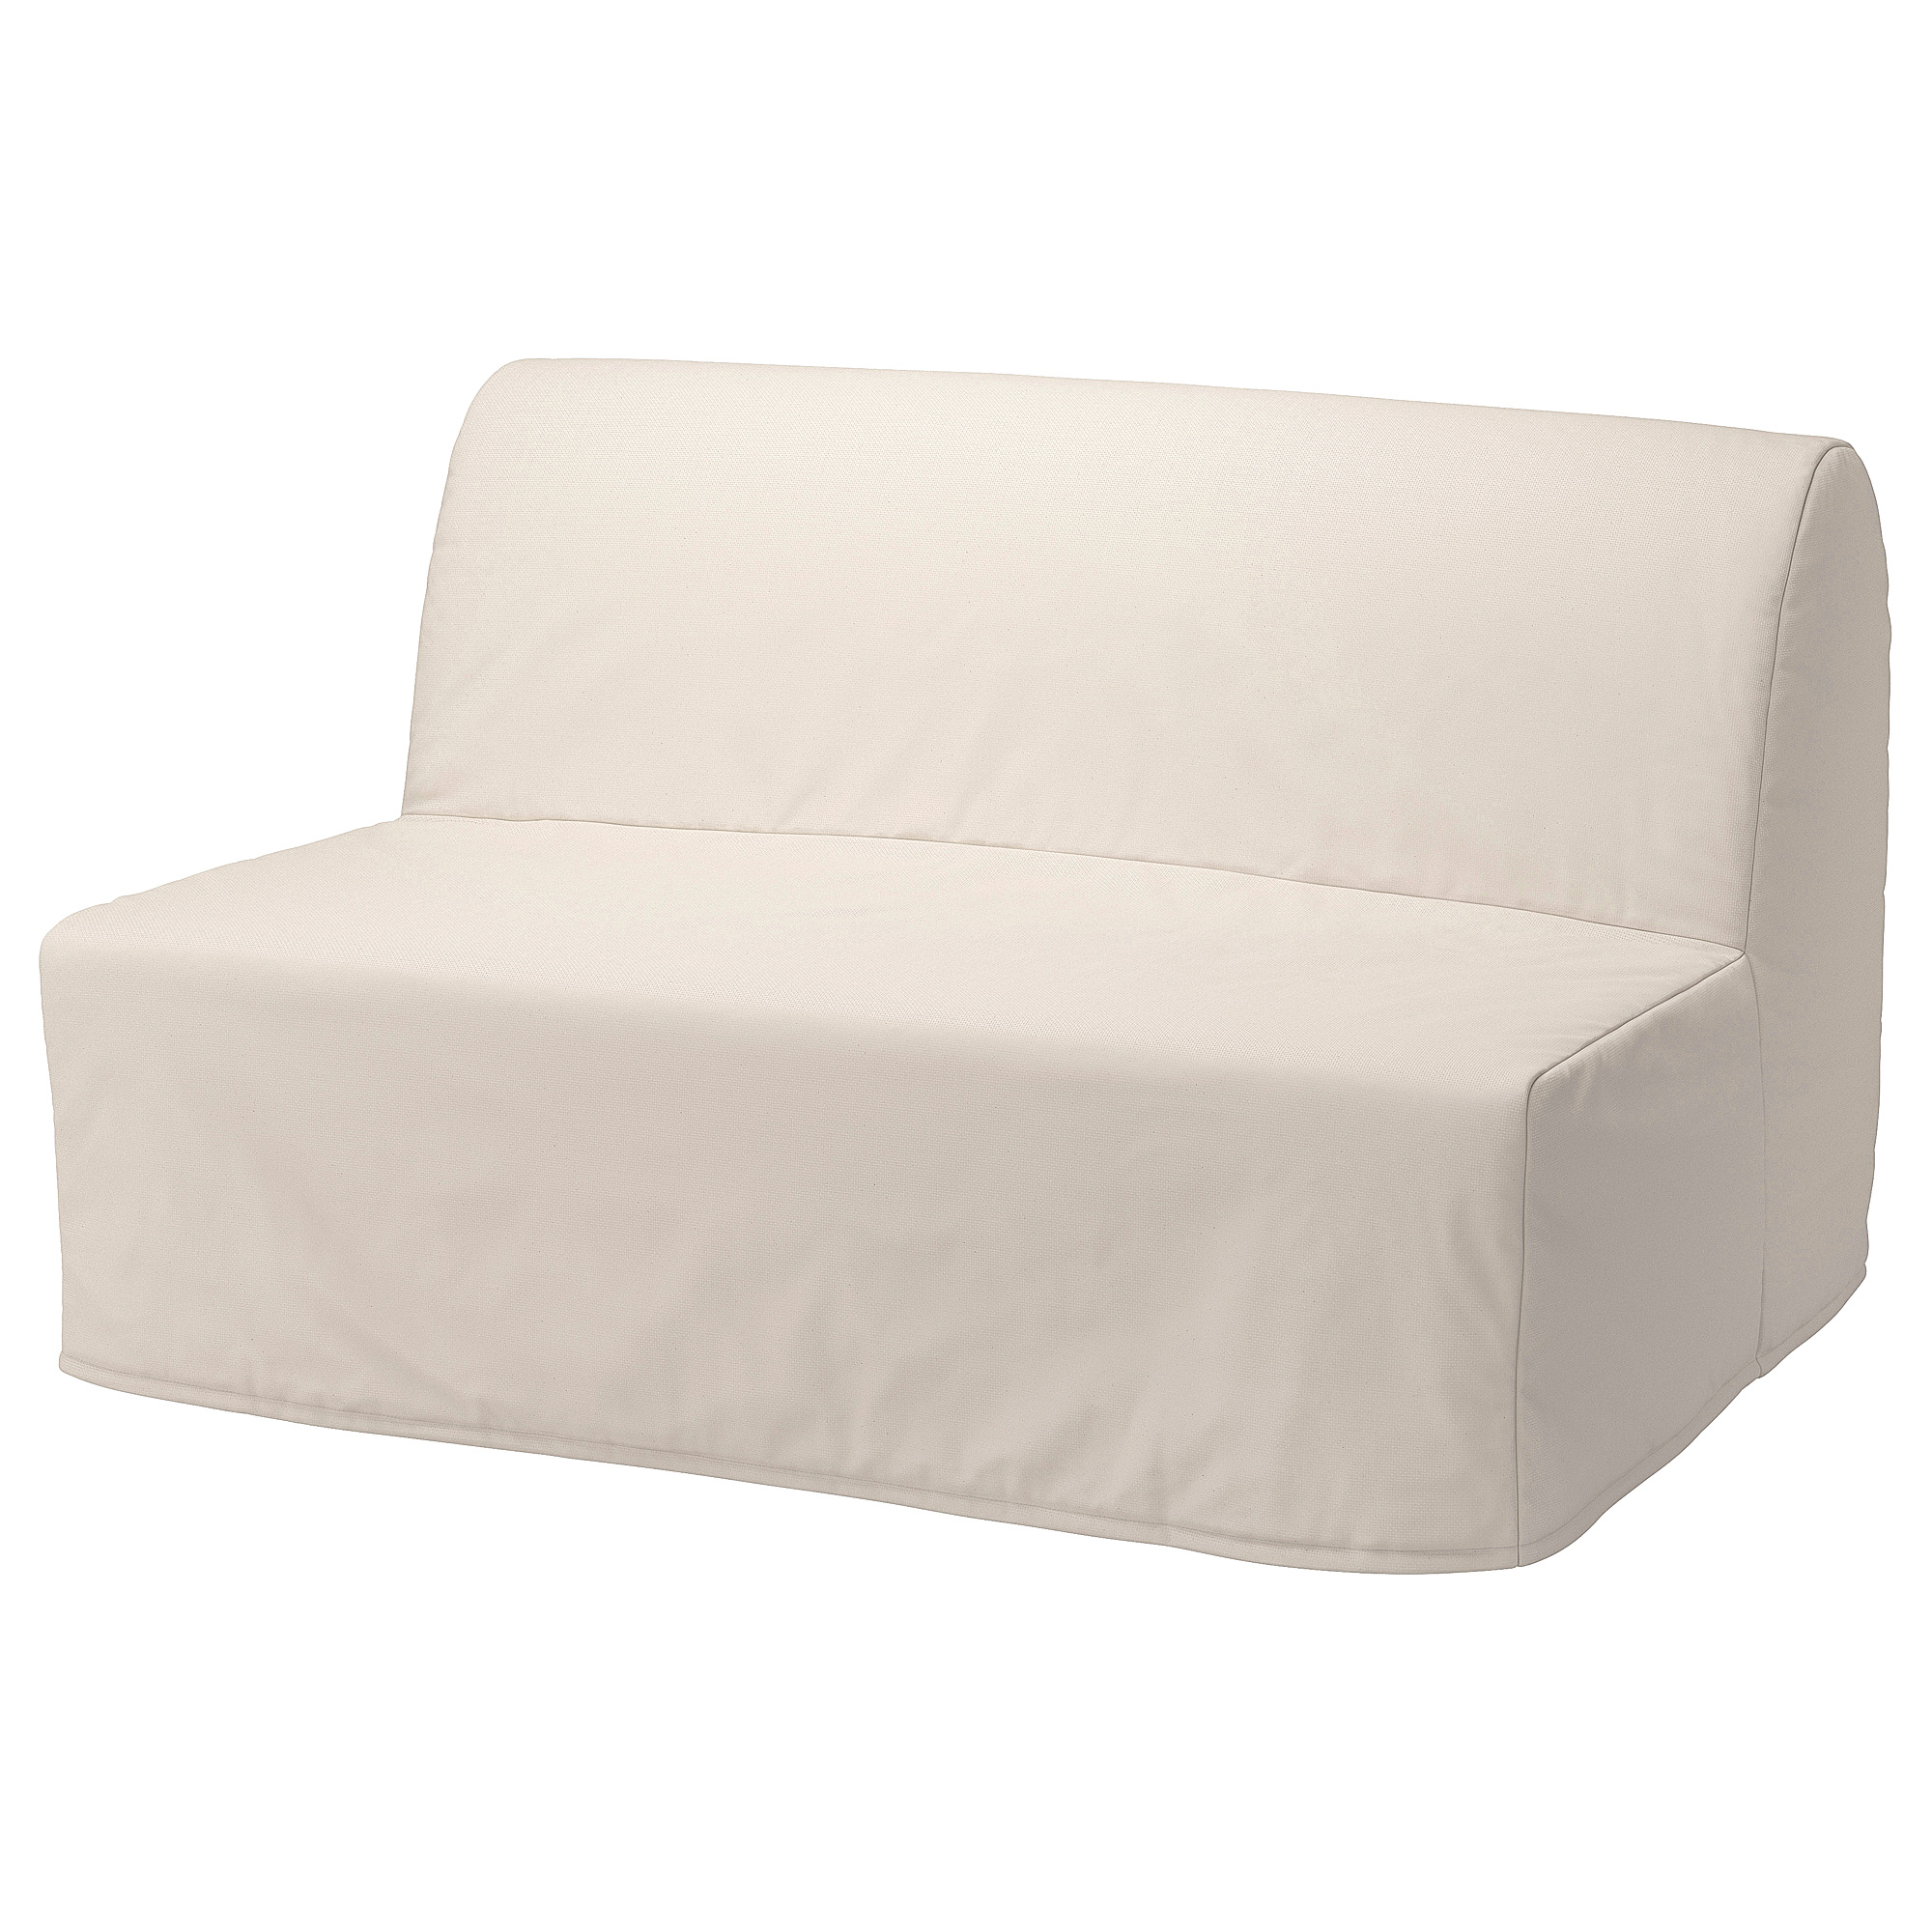 LYCKSELE HÅVET 2-seat sofa-bed